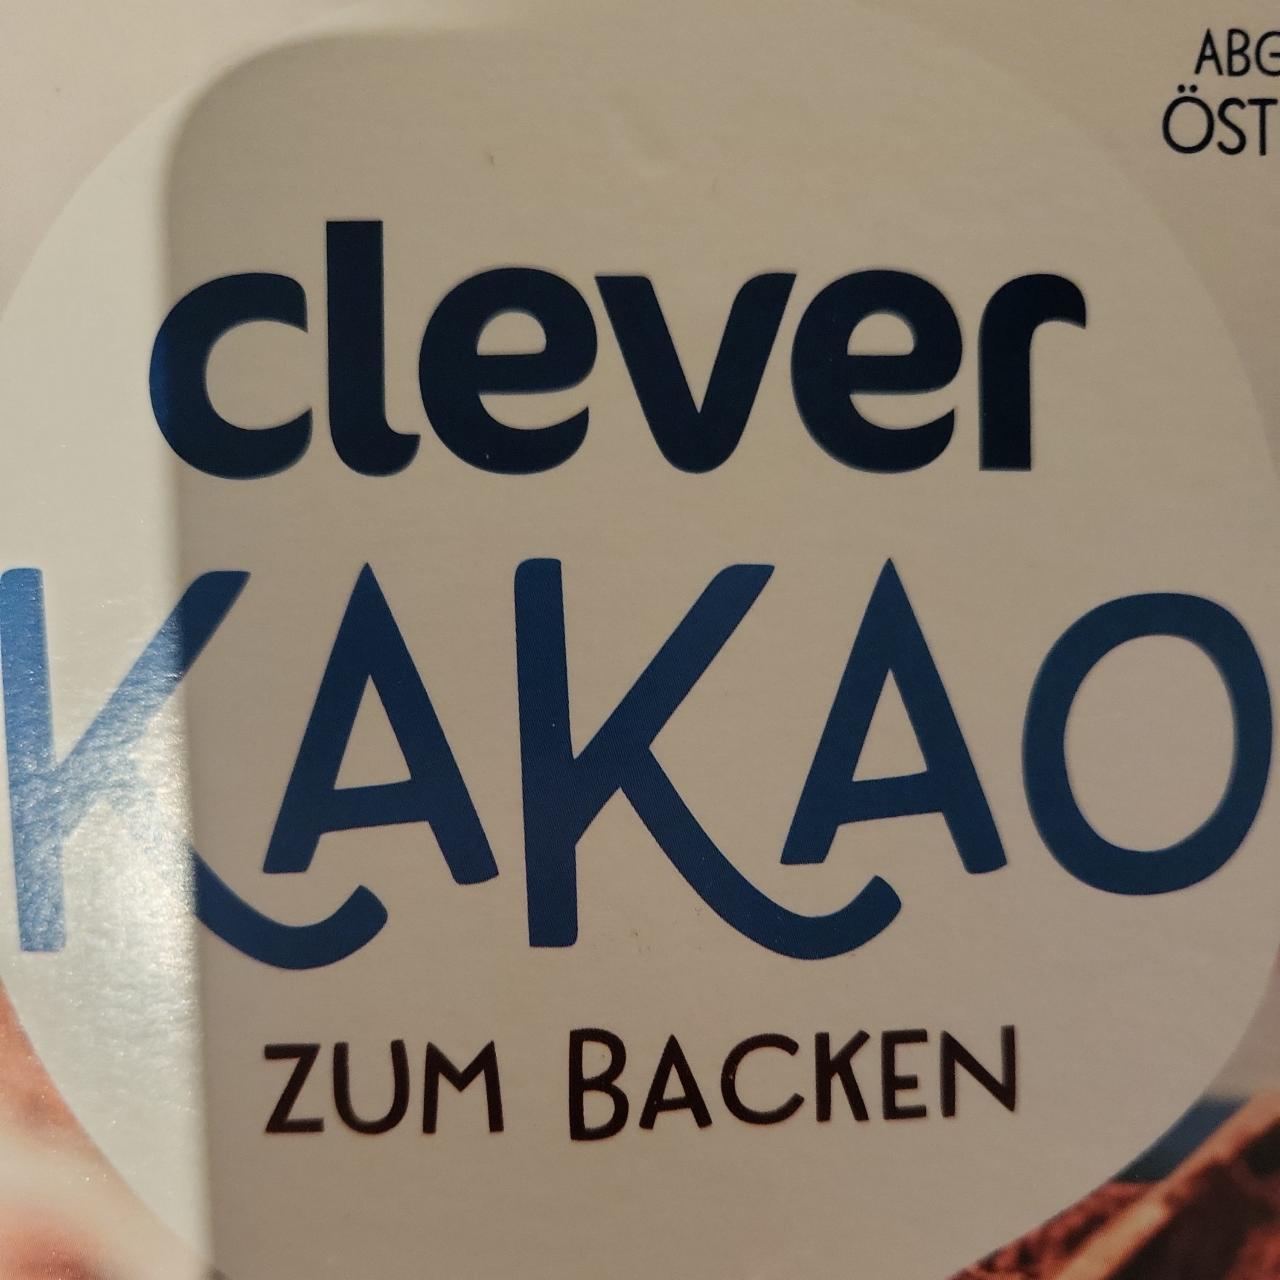 Фото - Kakao zum backen Clever